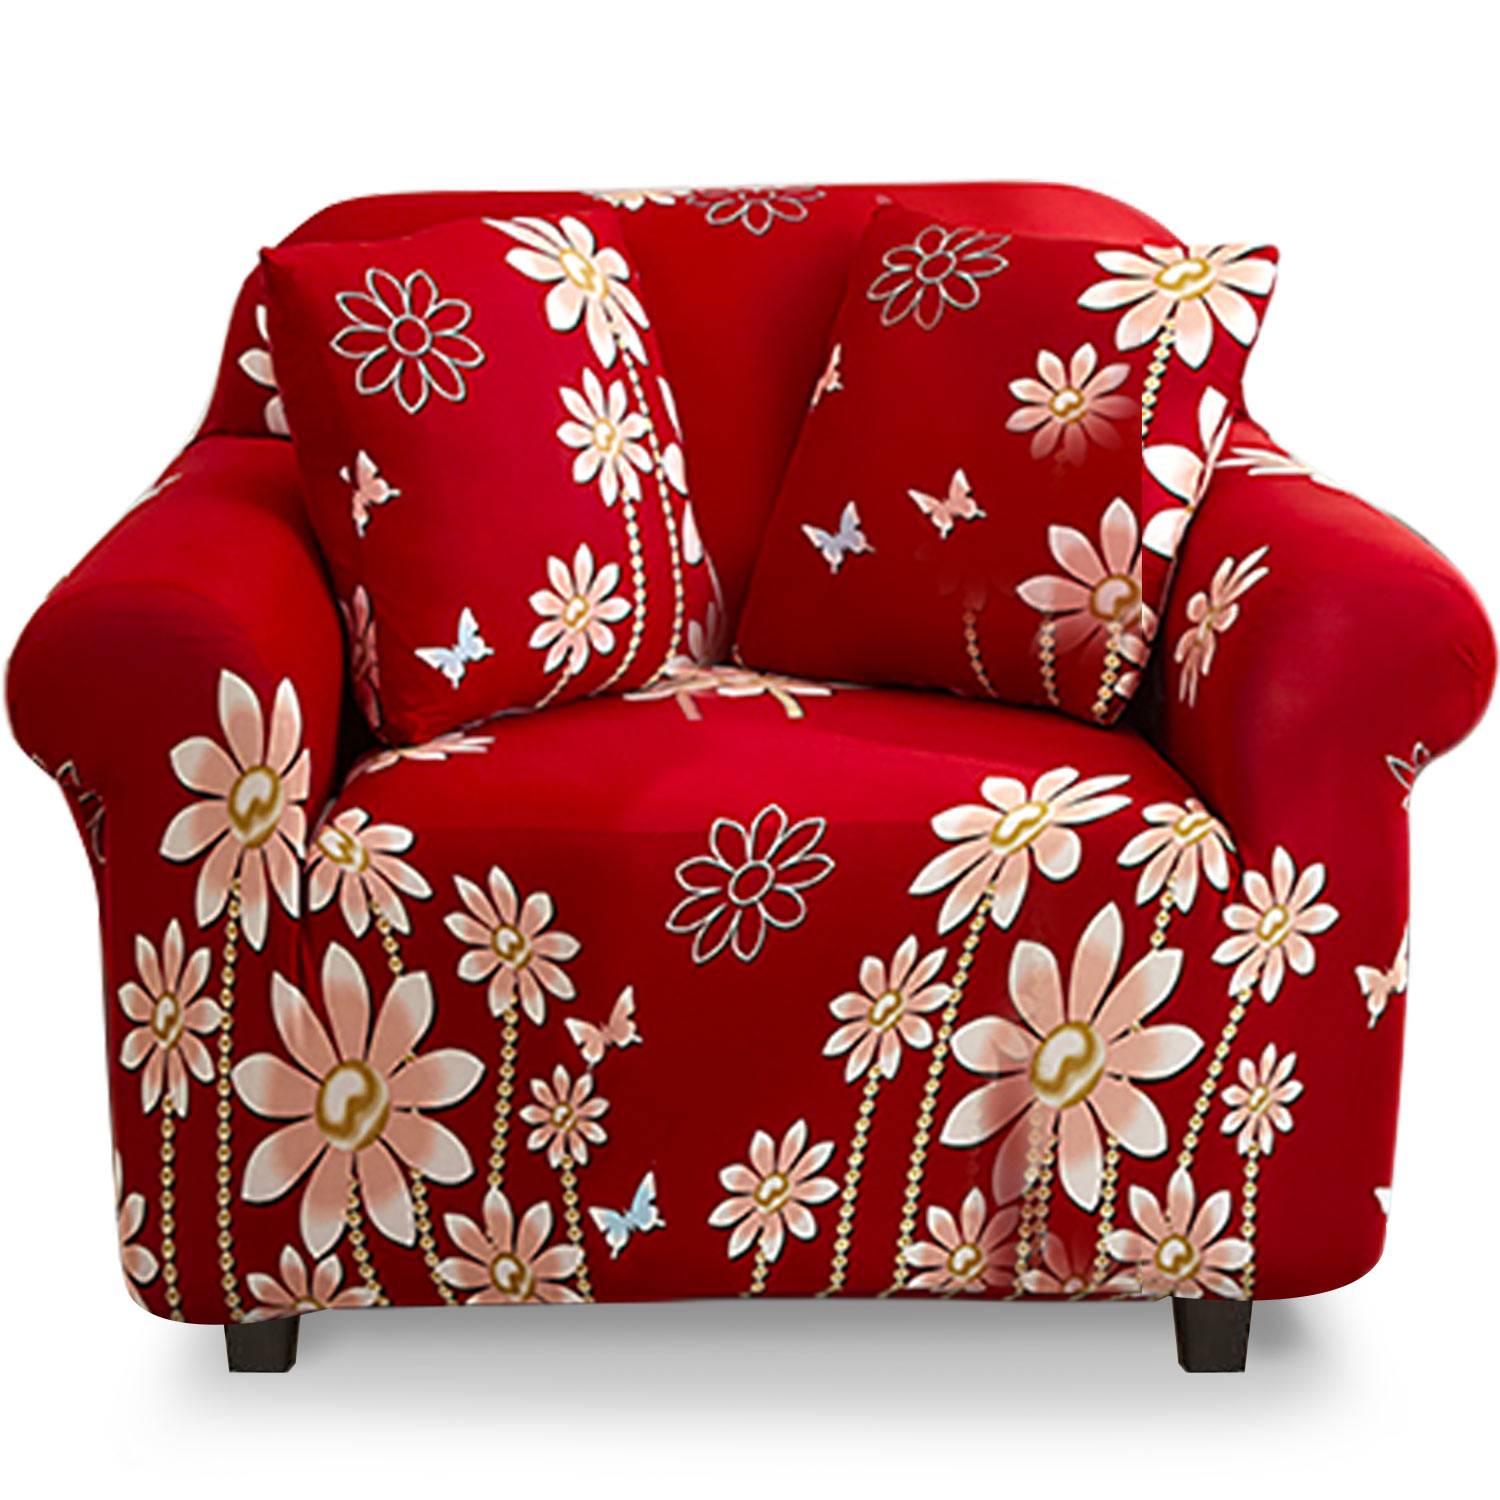 https://cdn.menzzo.com/media/catalog/product/h/o/u/housse-de-fauteuil-extensible-decoprotect-fleur-1-place0_0-633aa68b0cabf.jpg?twic=v1/resize=700